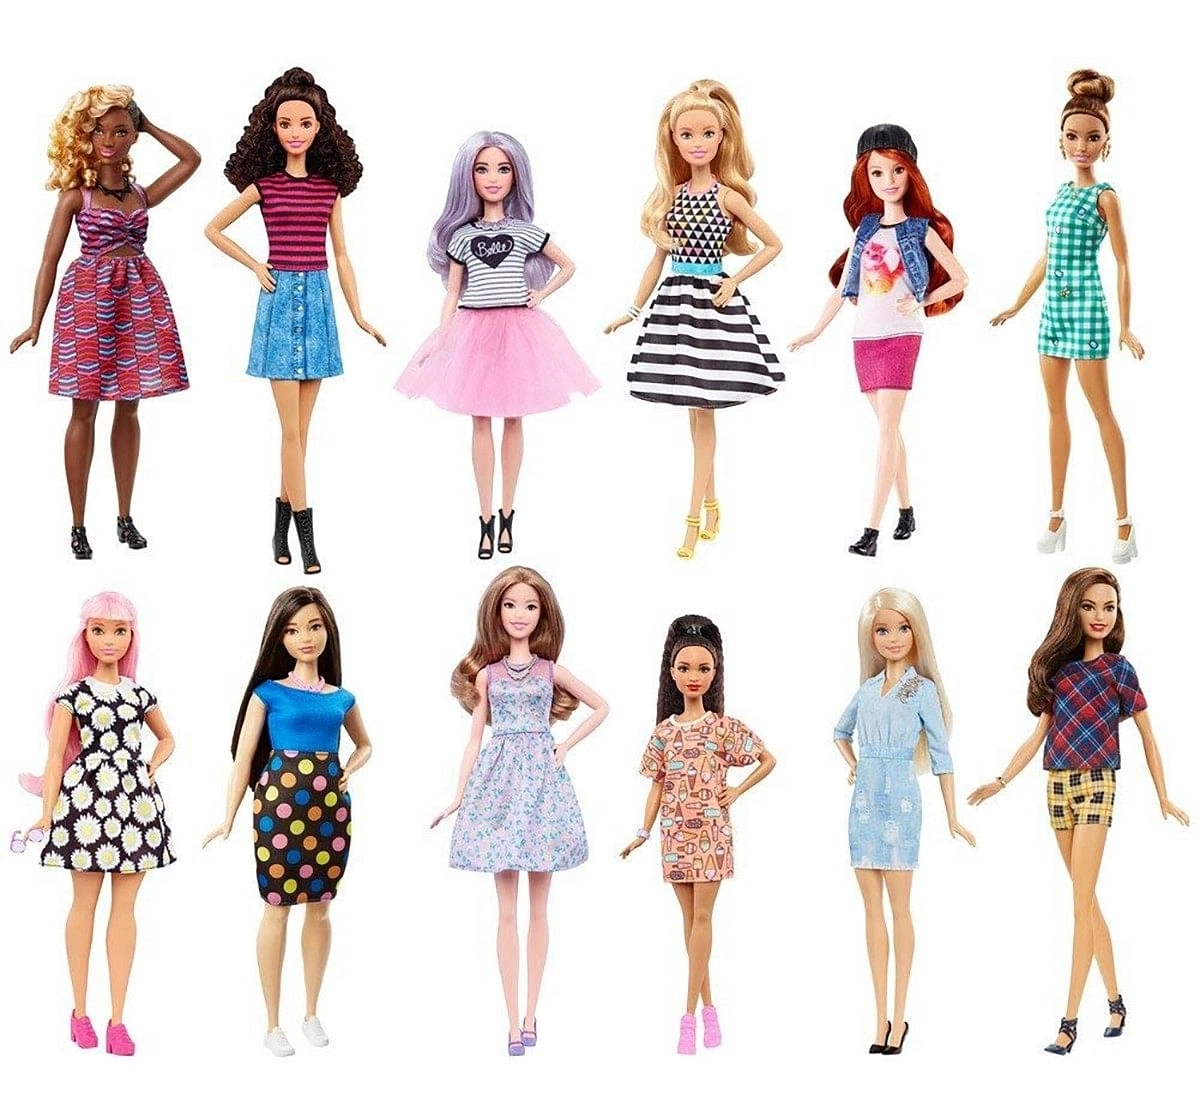 Barbie Fashionista Doll, Dolls & Accessories for Girls, 3Y+, Assorted